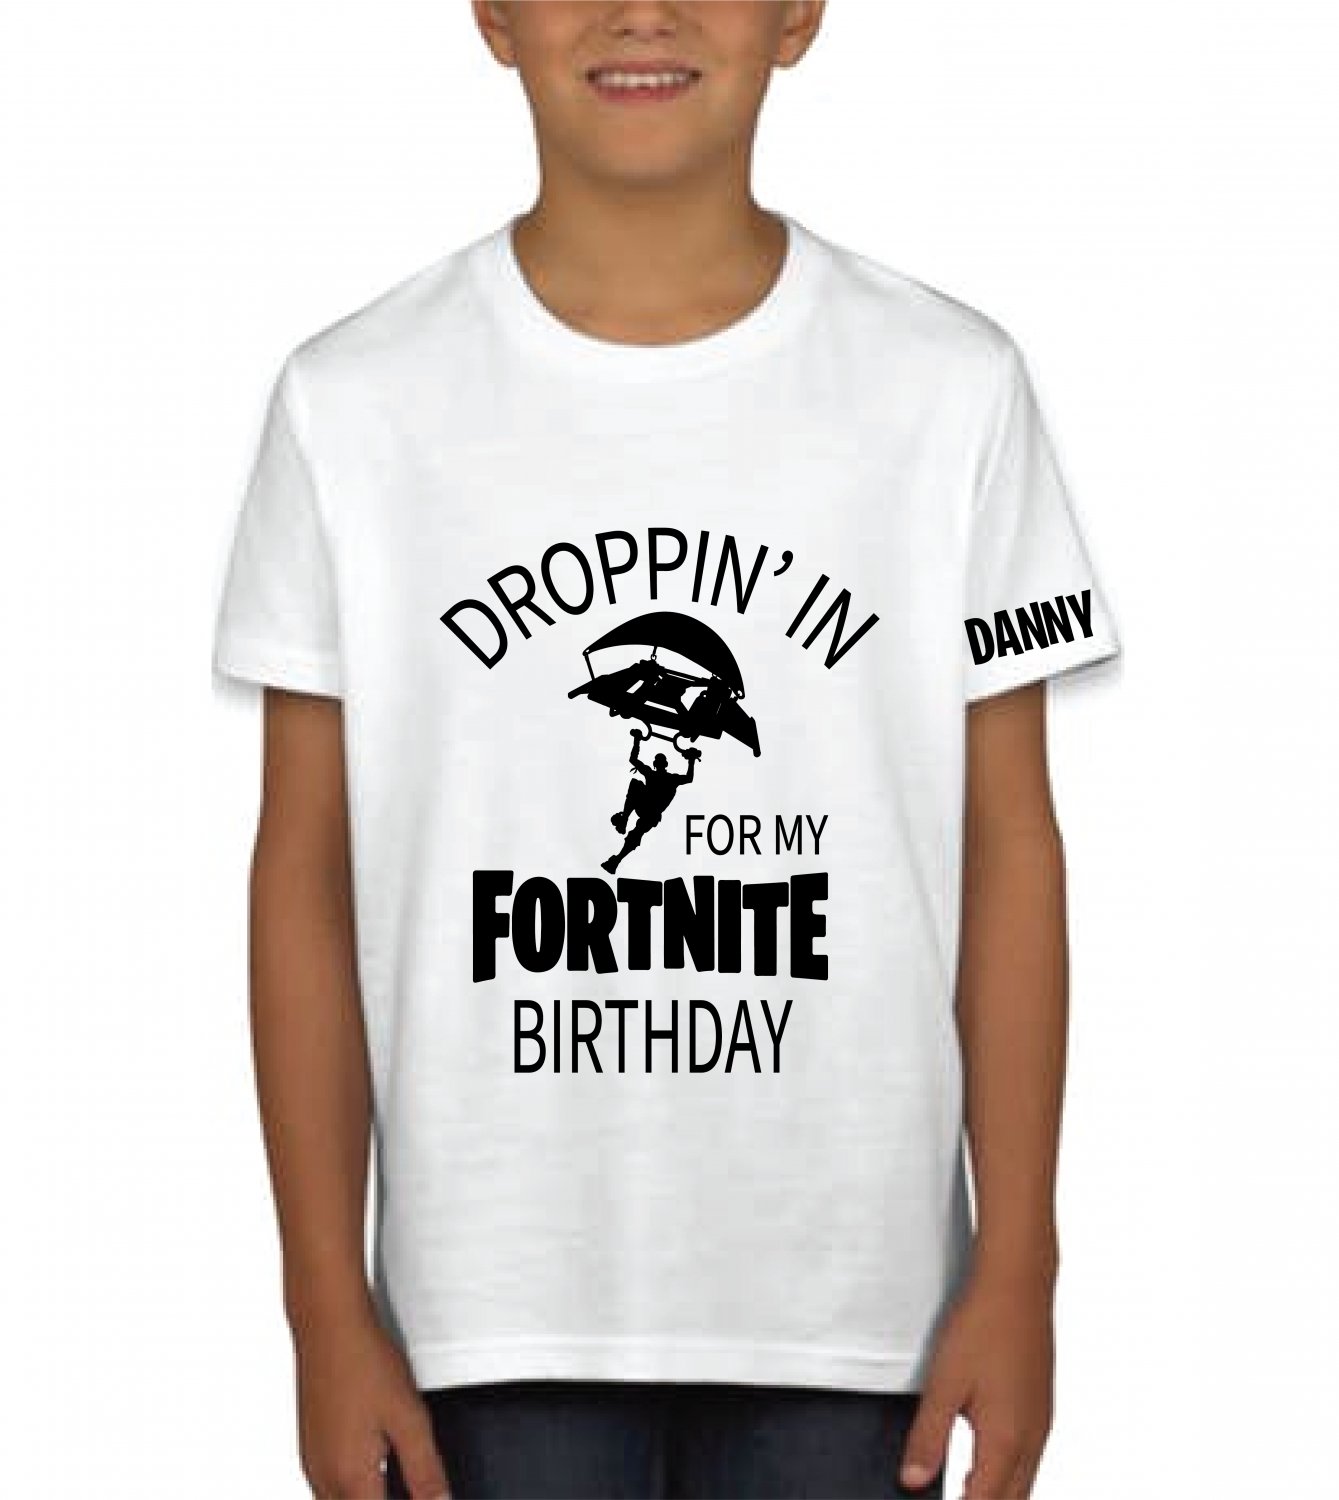 Fortnite Birthday Shirt Ideas